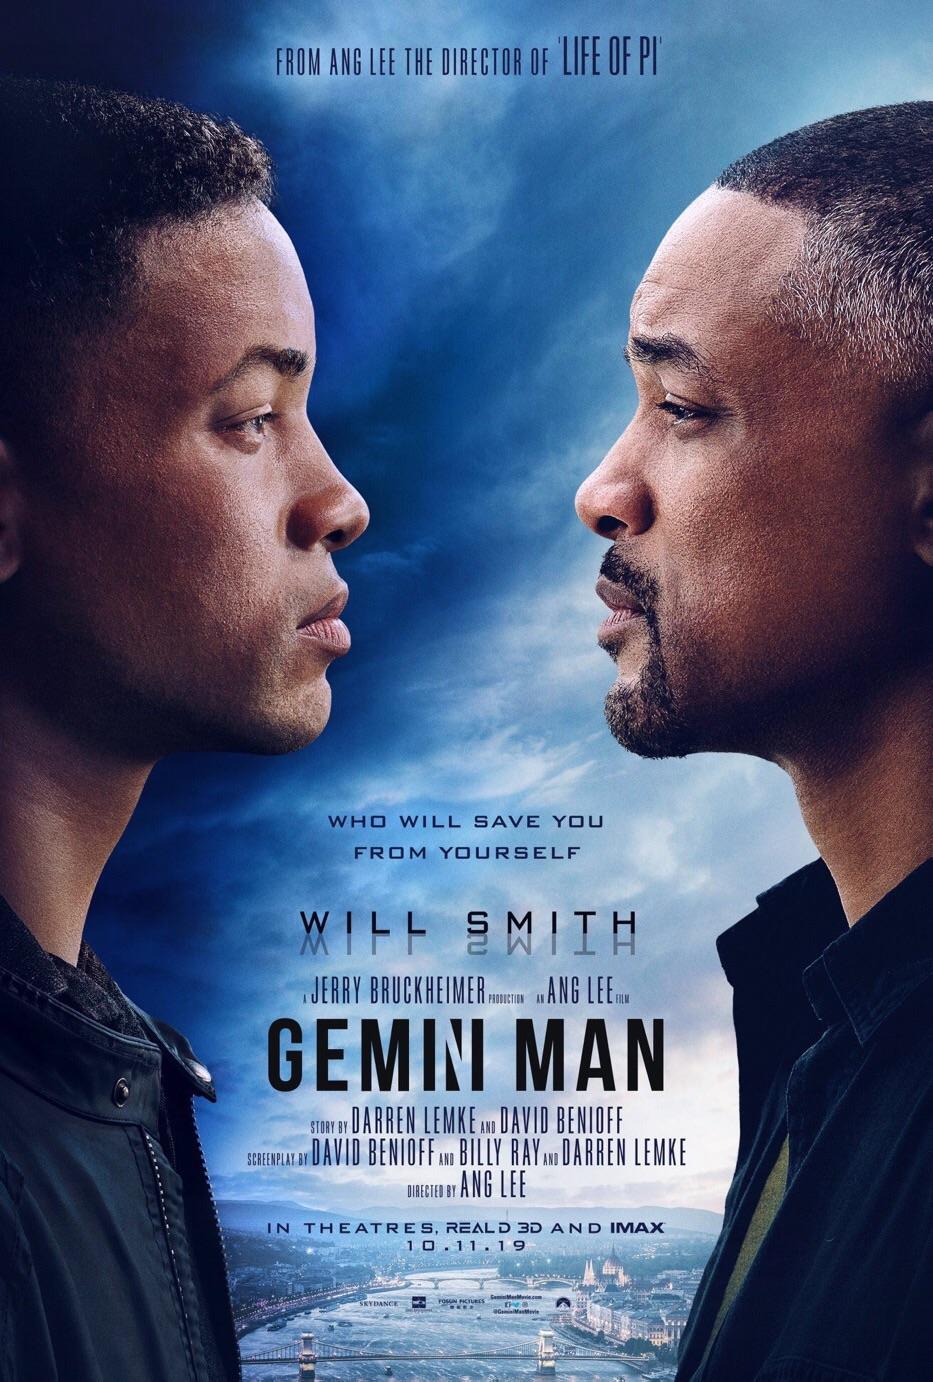 Gemini Man Will Smith